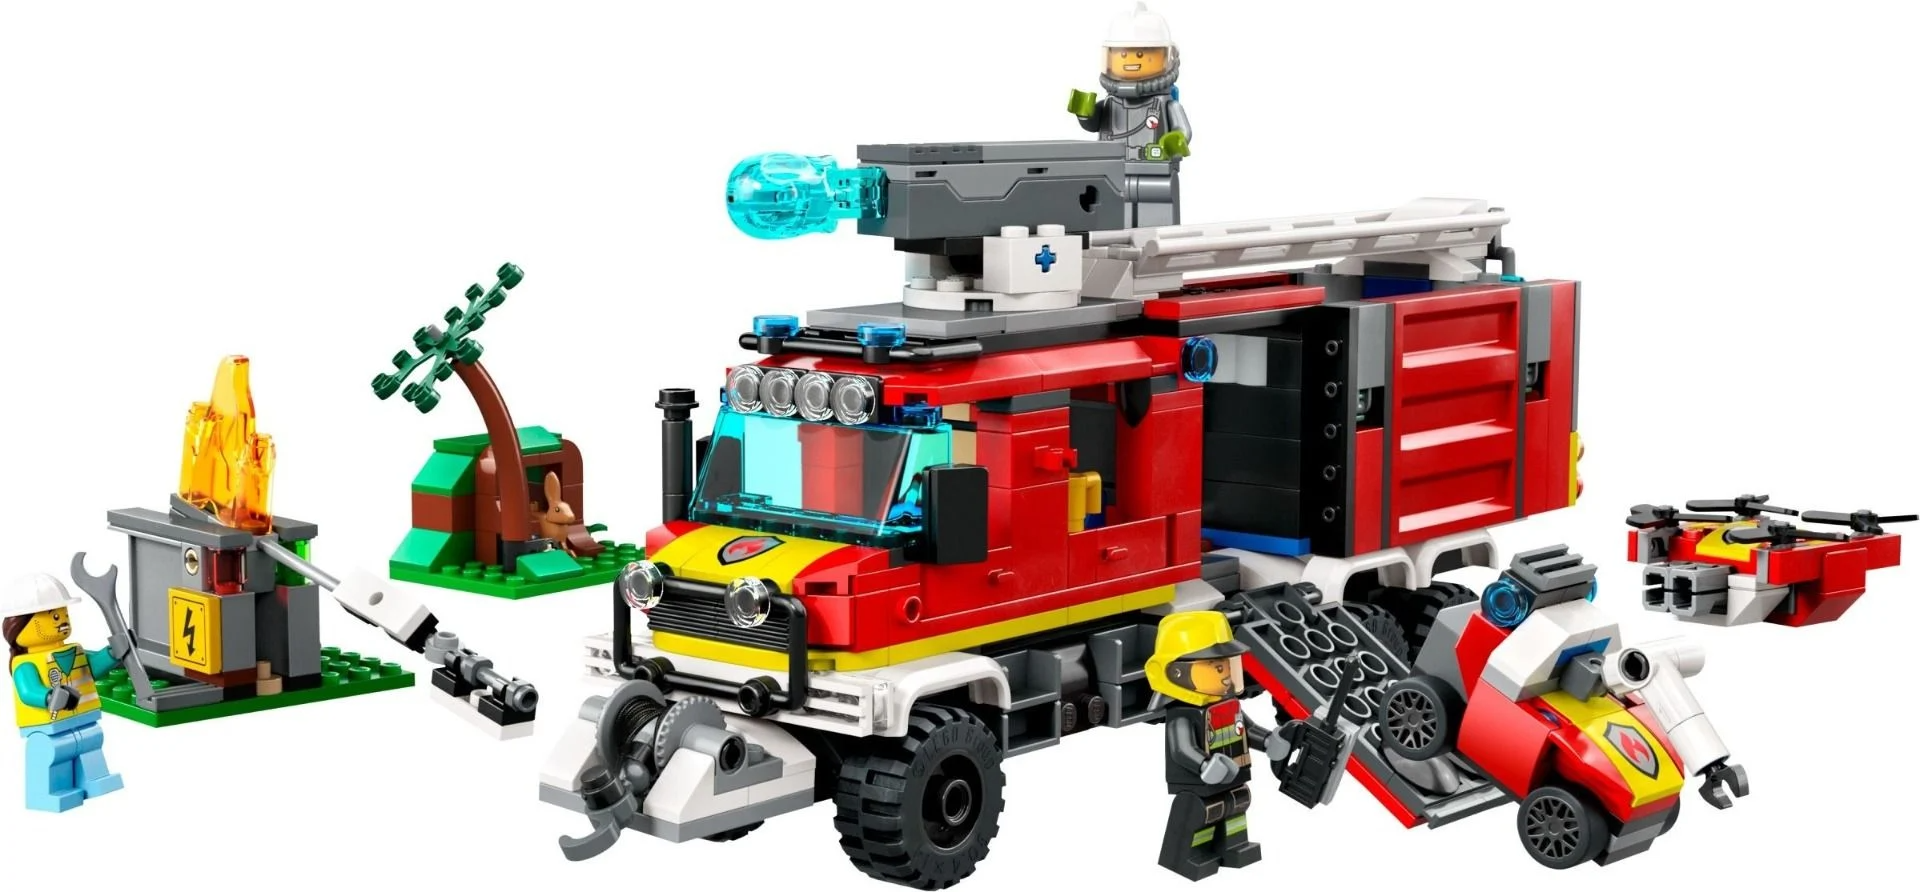 LEGO City Fire Command Truck